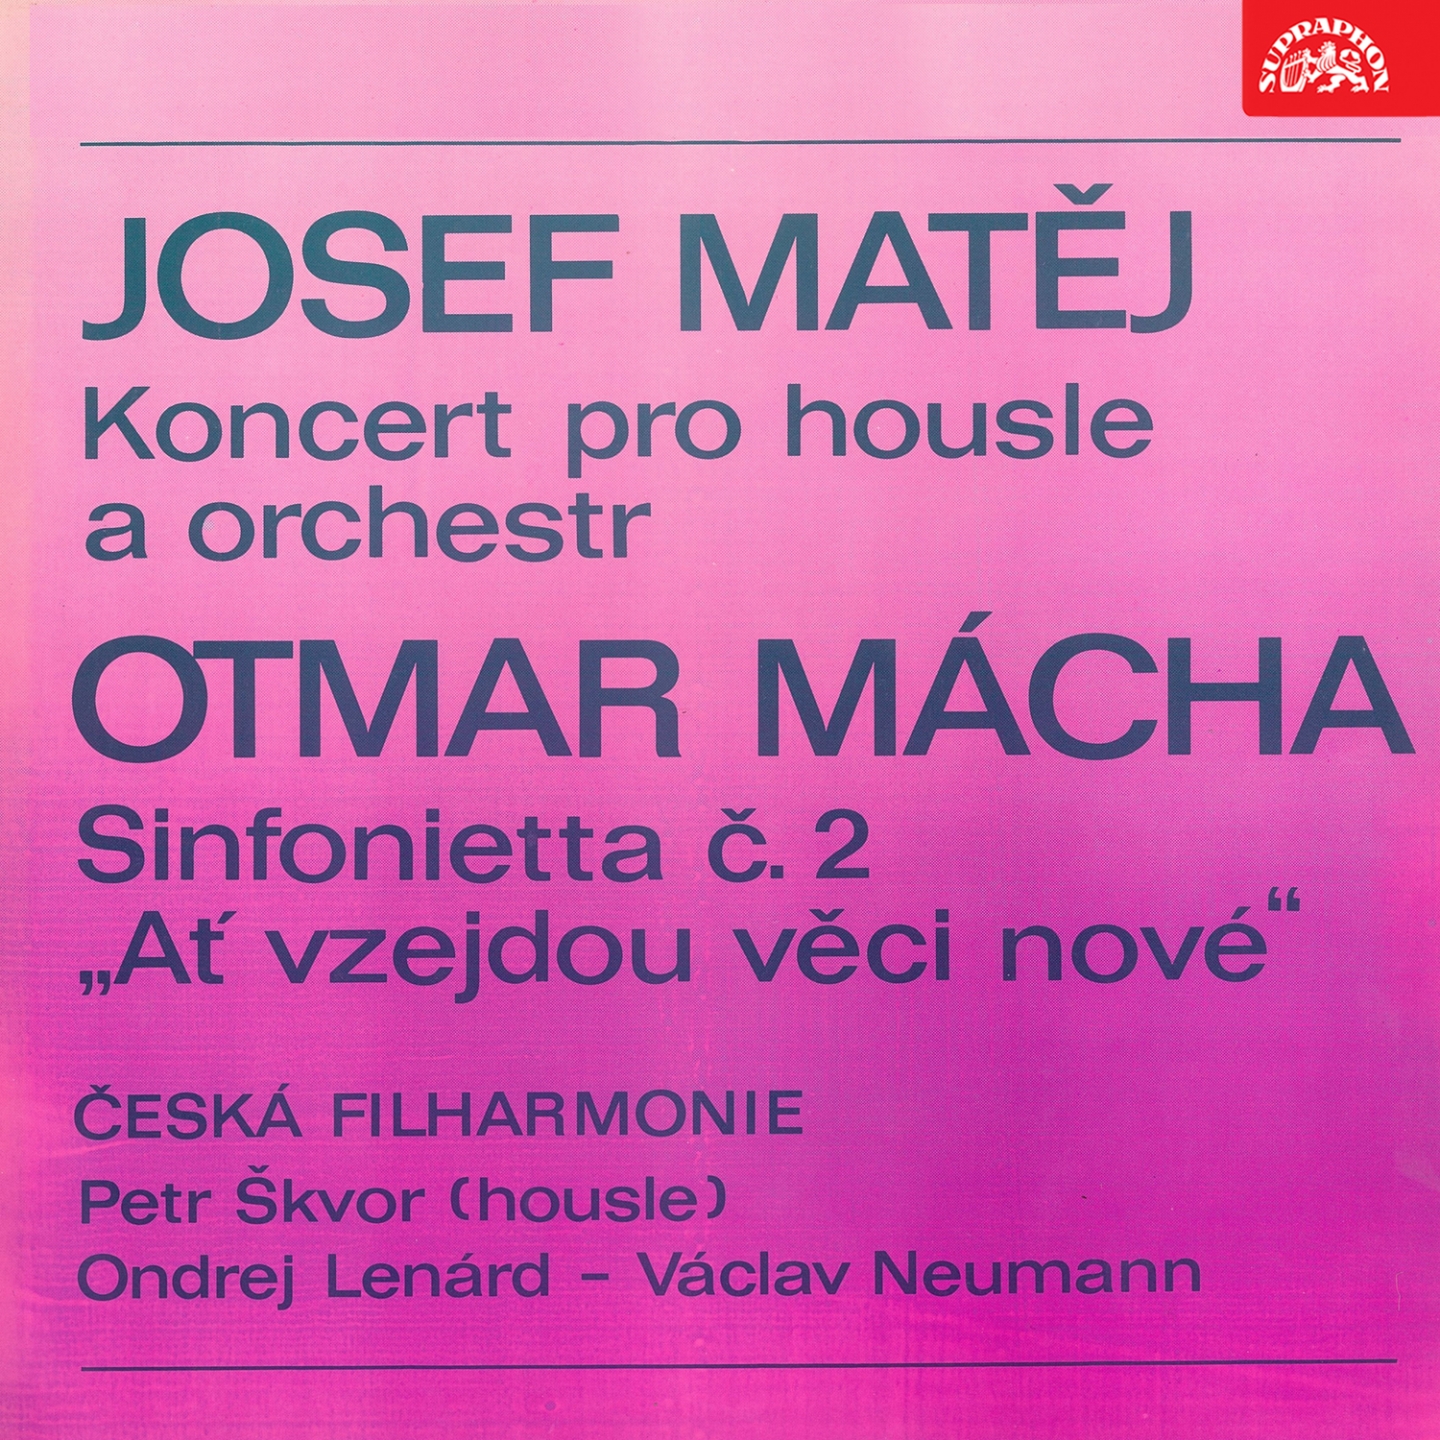 Mate j: Violin Concerto  Ma cha: Sinfonietta No. 2 " Let Things New"